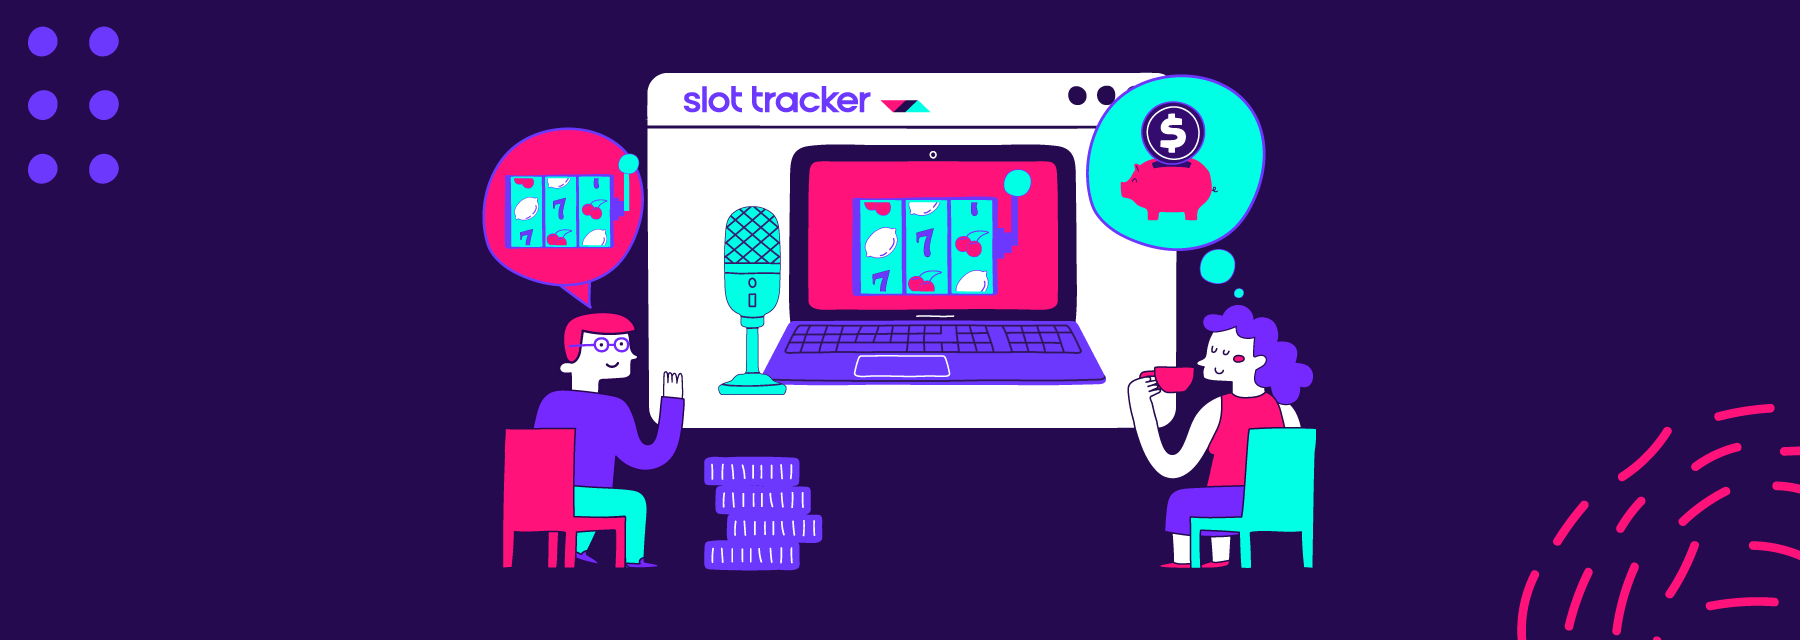 Slot Tracker & The Slot Beasts partnership: Live Streams and prizes!